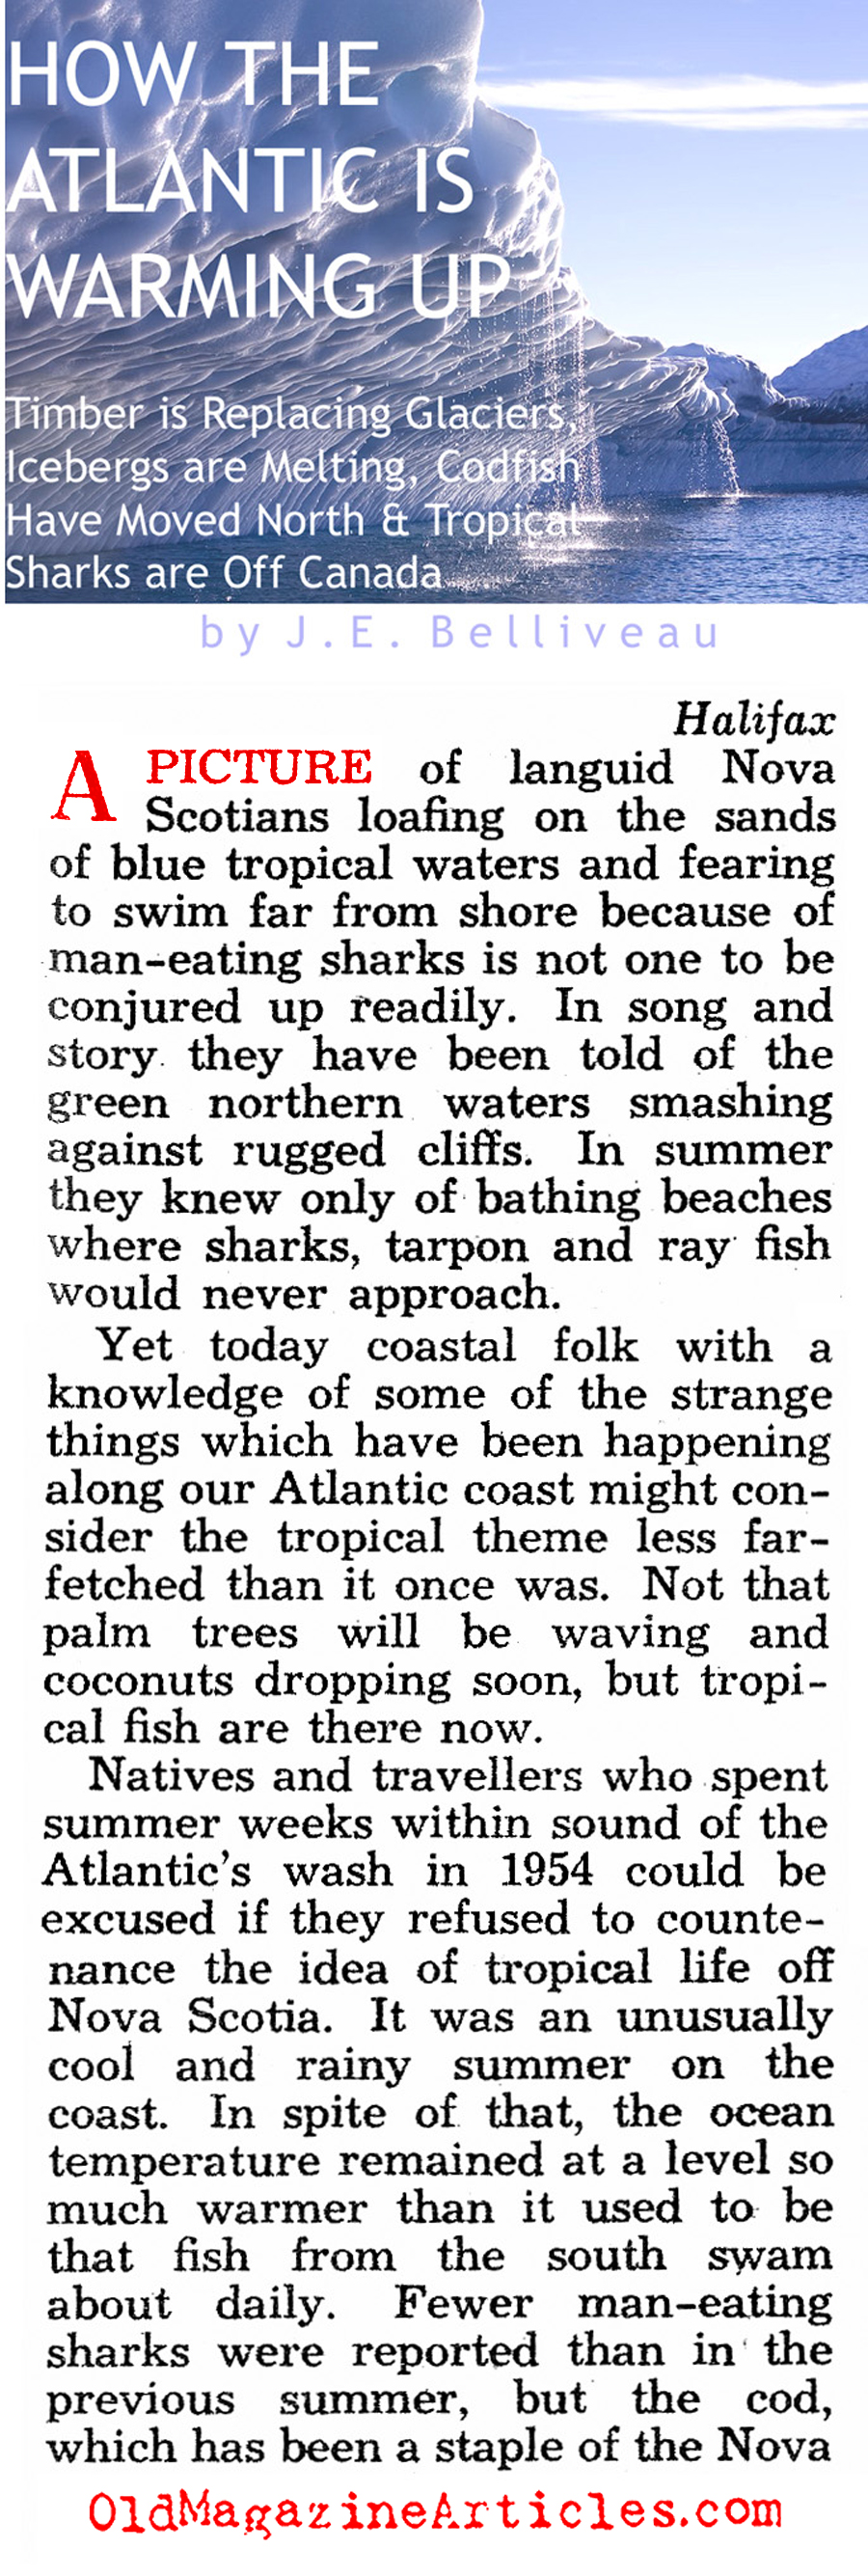 The Atlantic Heats Up (Pic Magazine, 1955)